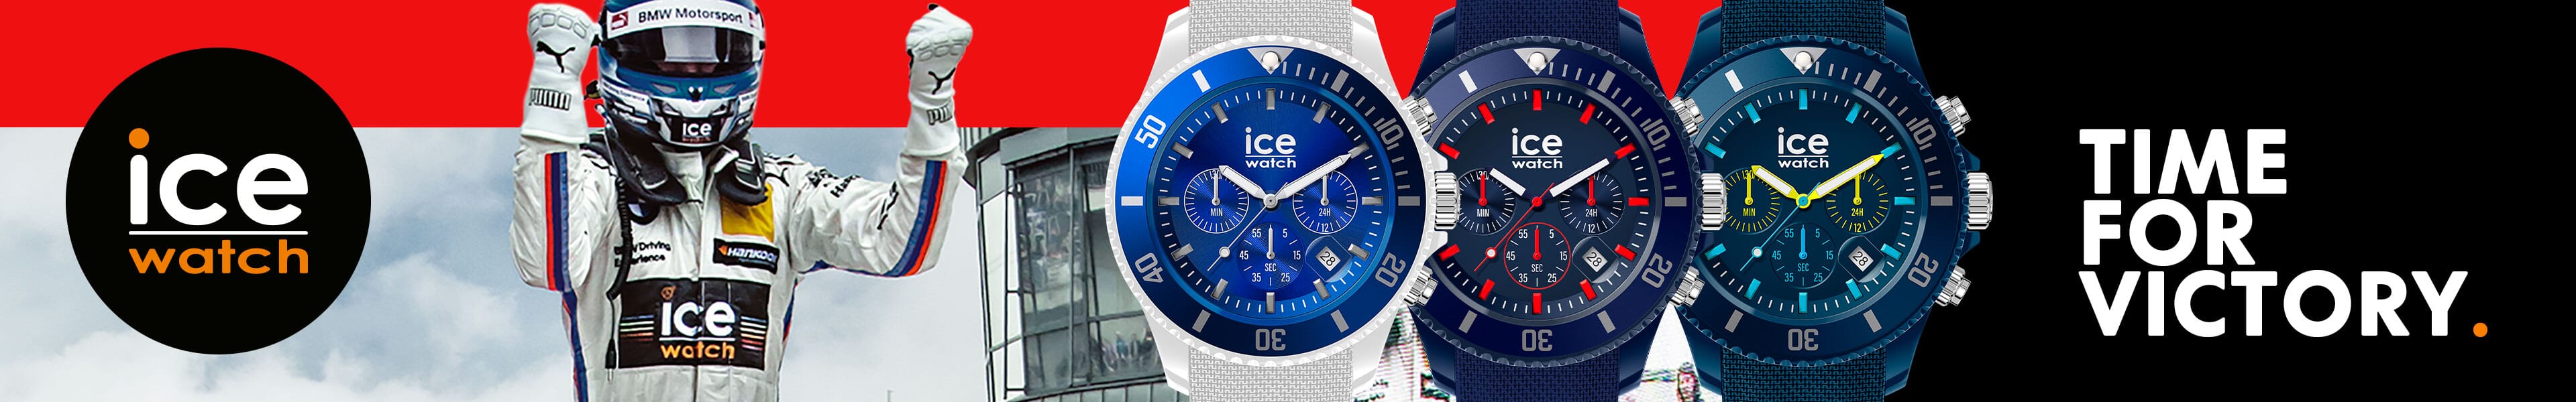 ICE-Watch Horloges